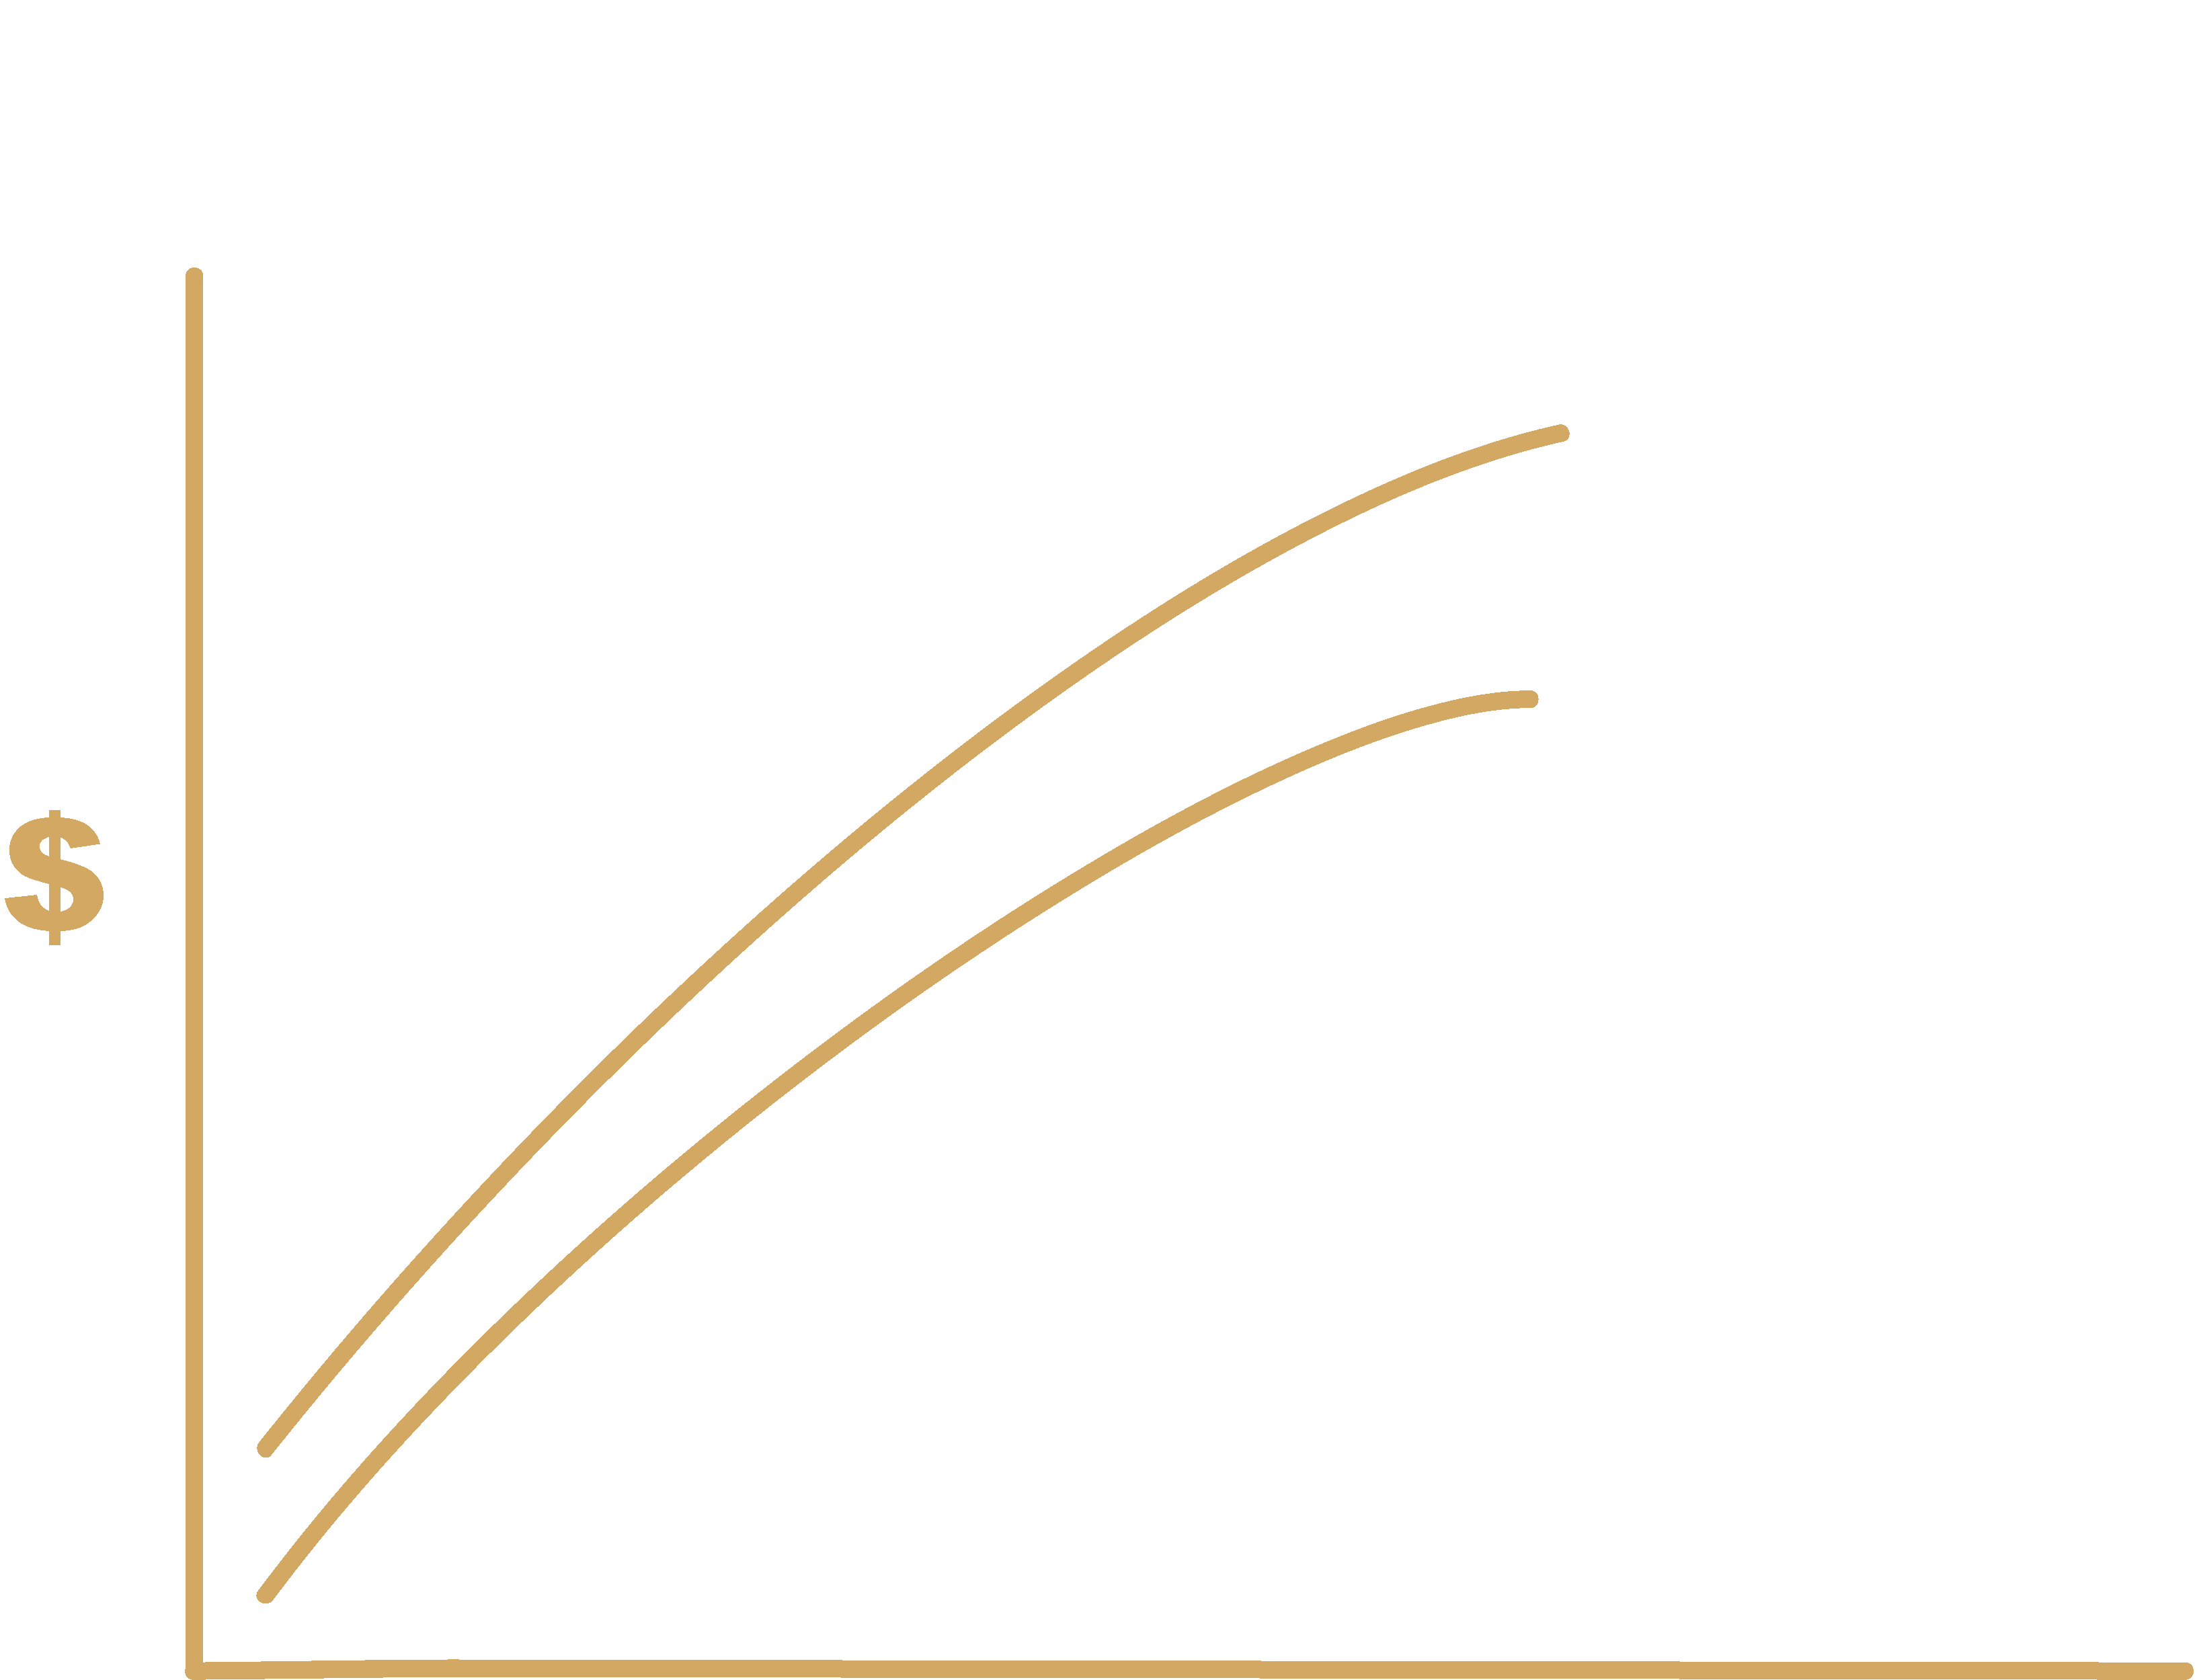 Markets Follow Money Printers